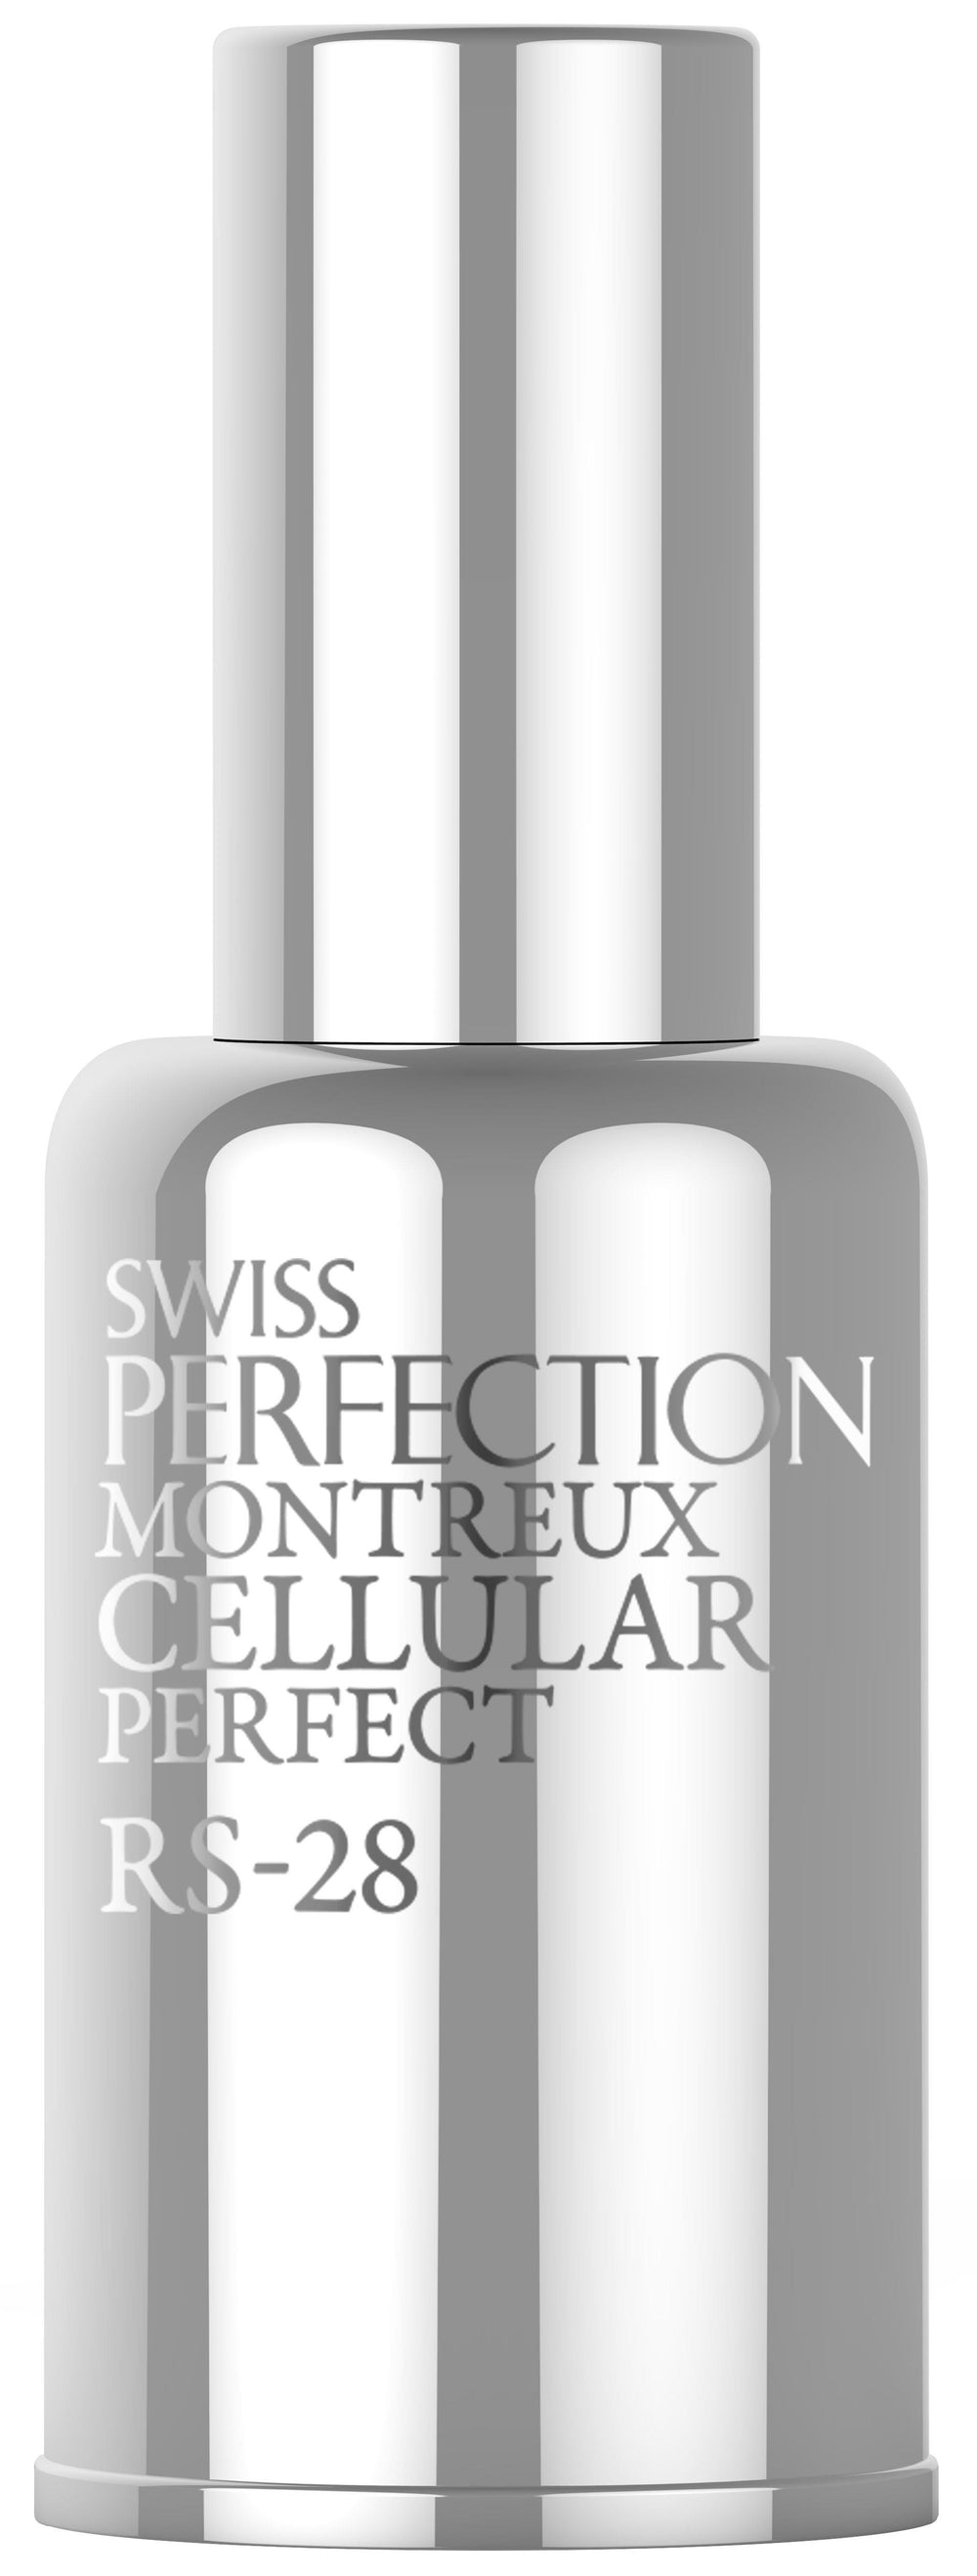 Swiss Perfection RS-28 Cellular Rejuvenation Serum 30 ml